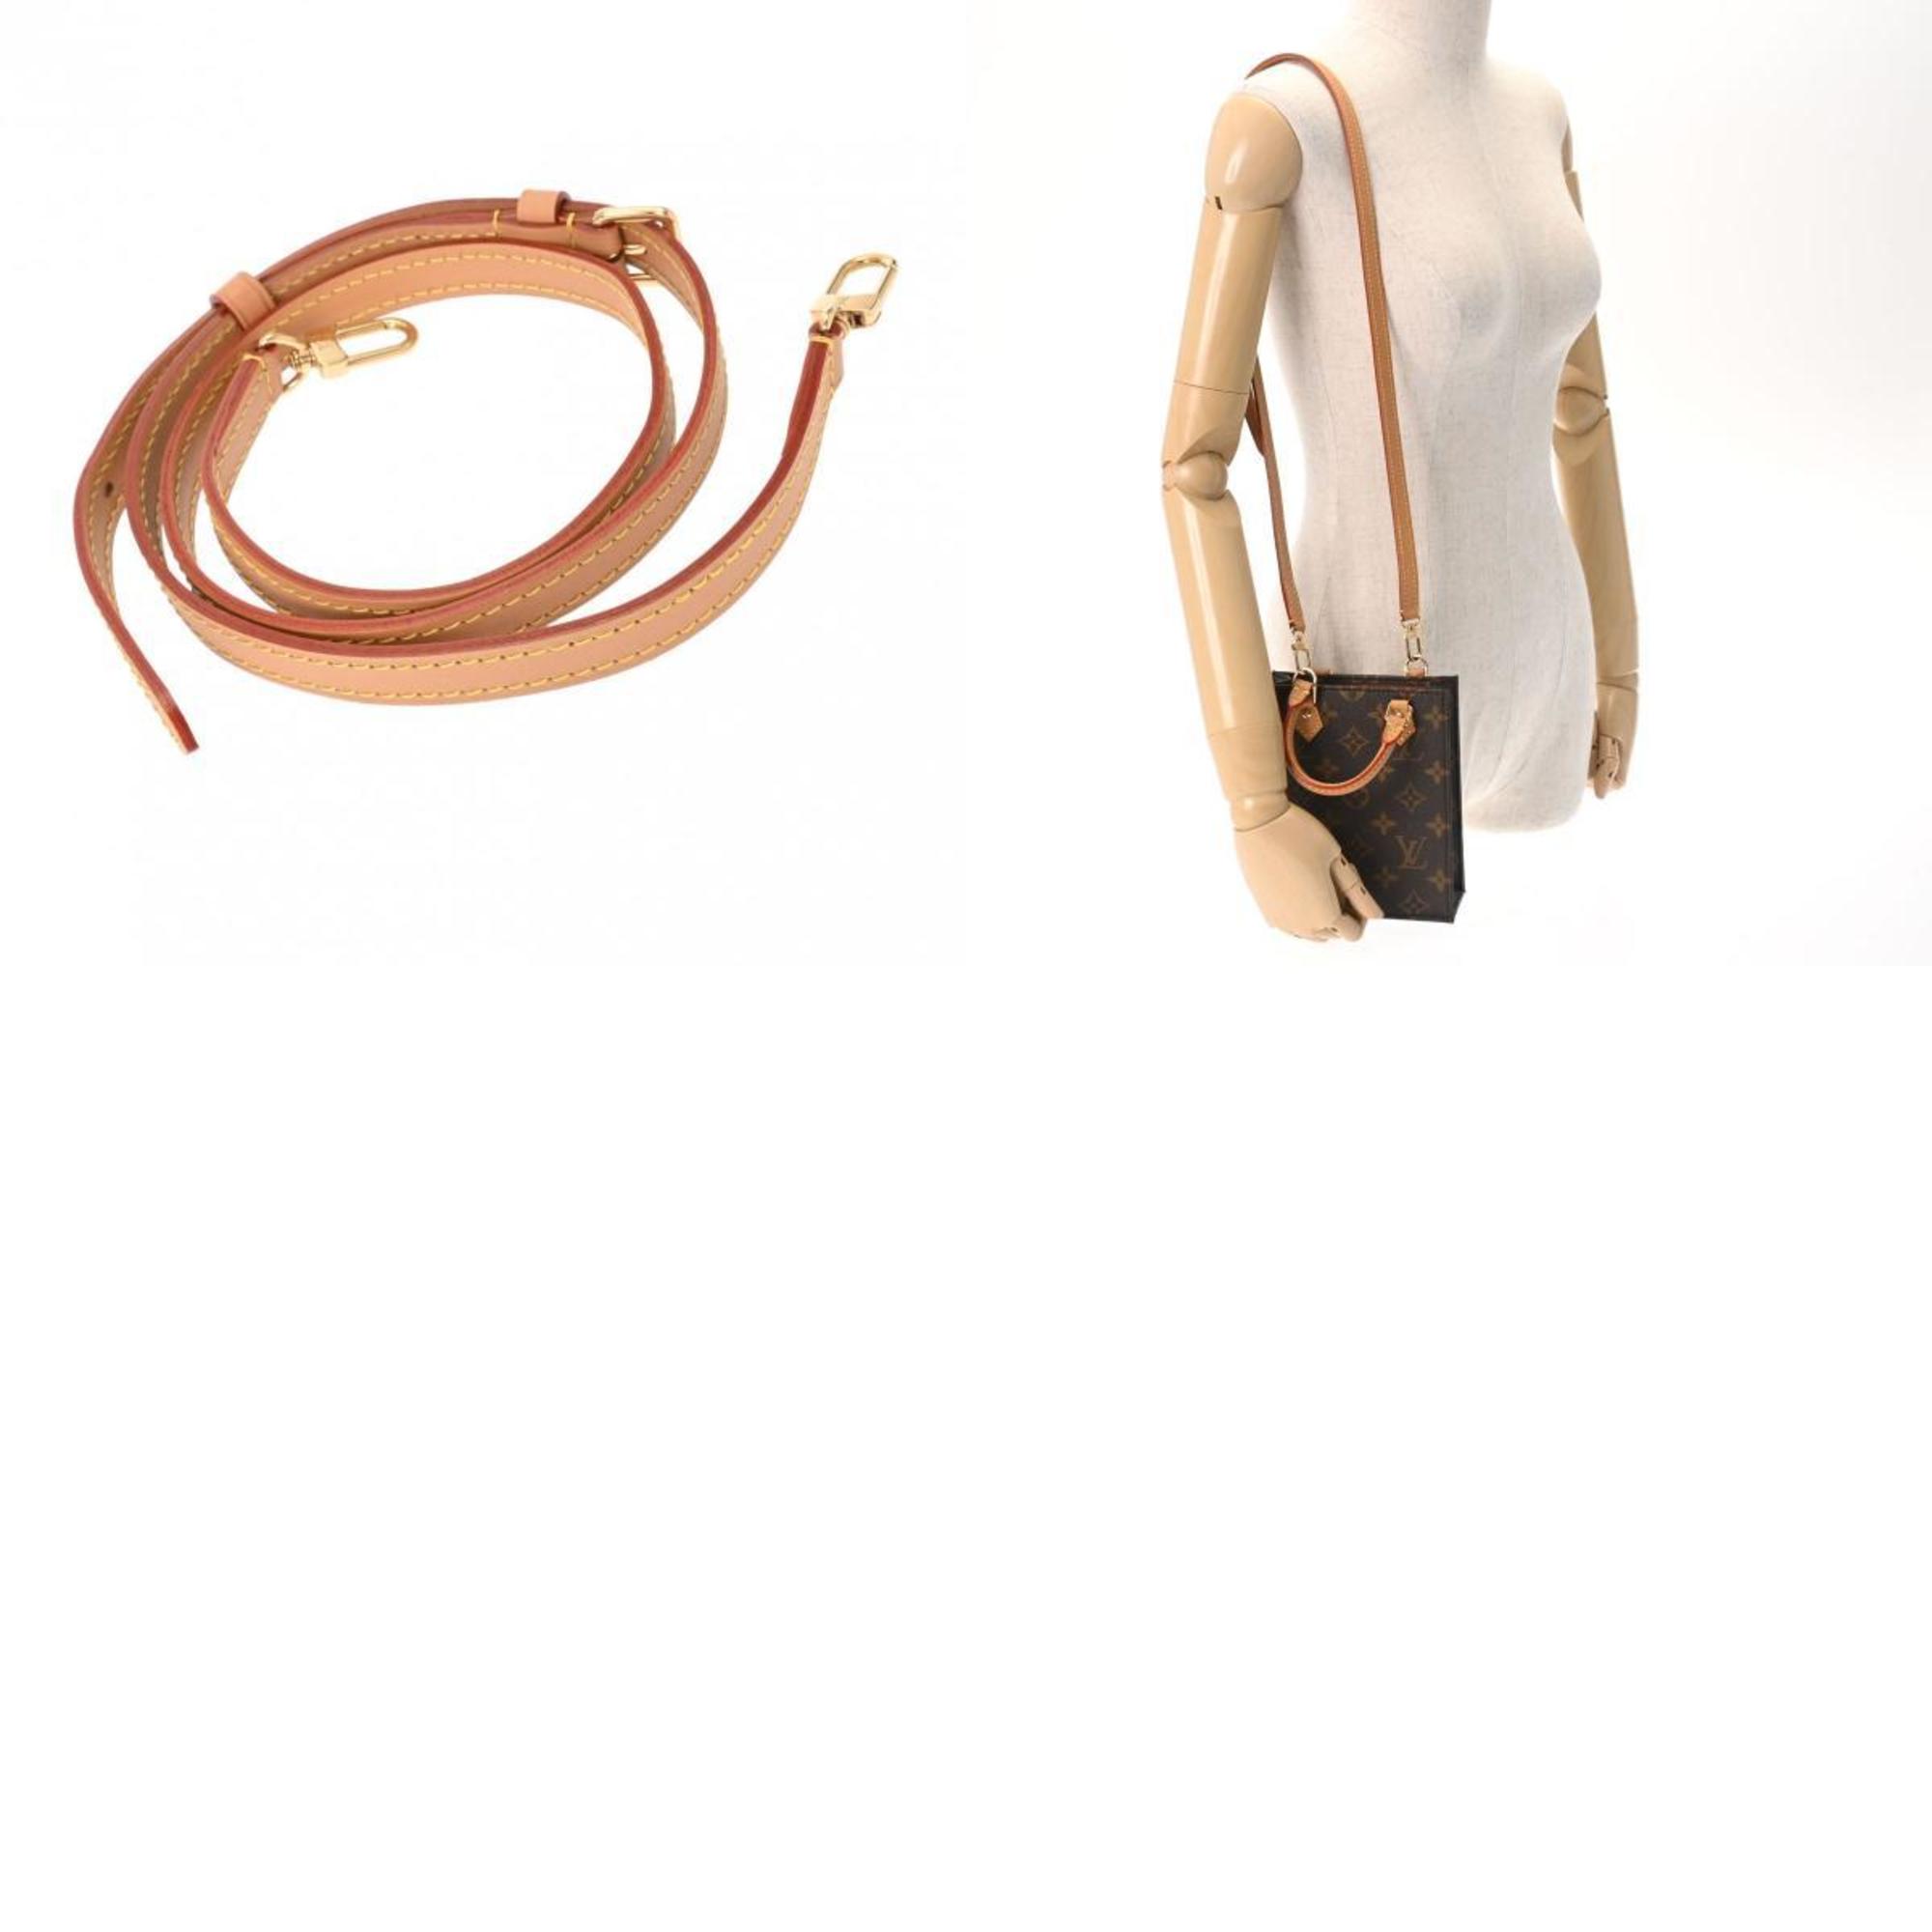 LOUIS VUITTON Louis Vuitton Monogram Petite Sac Plat Brown M69442 Women's Canvas Handbag